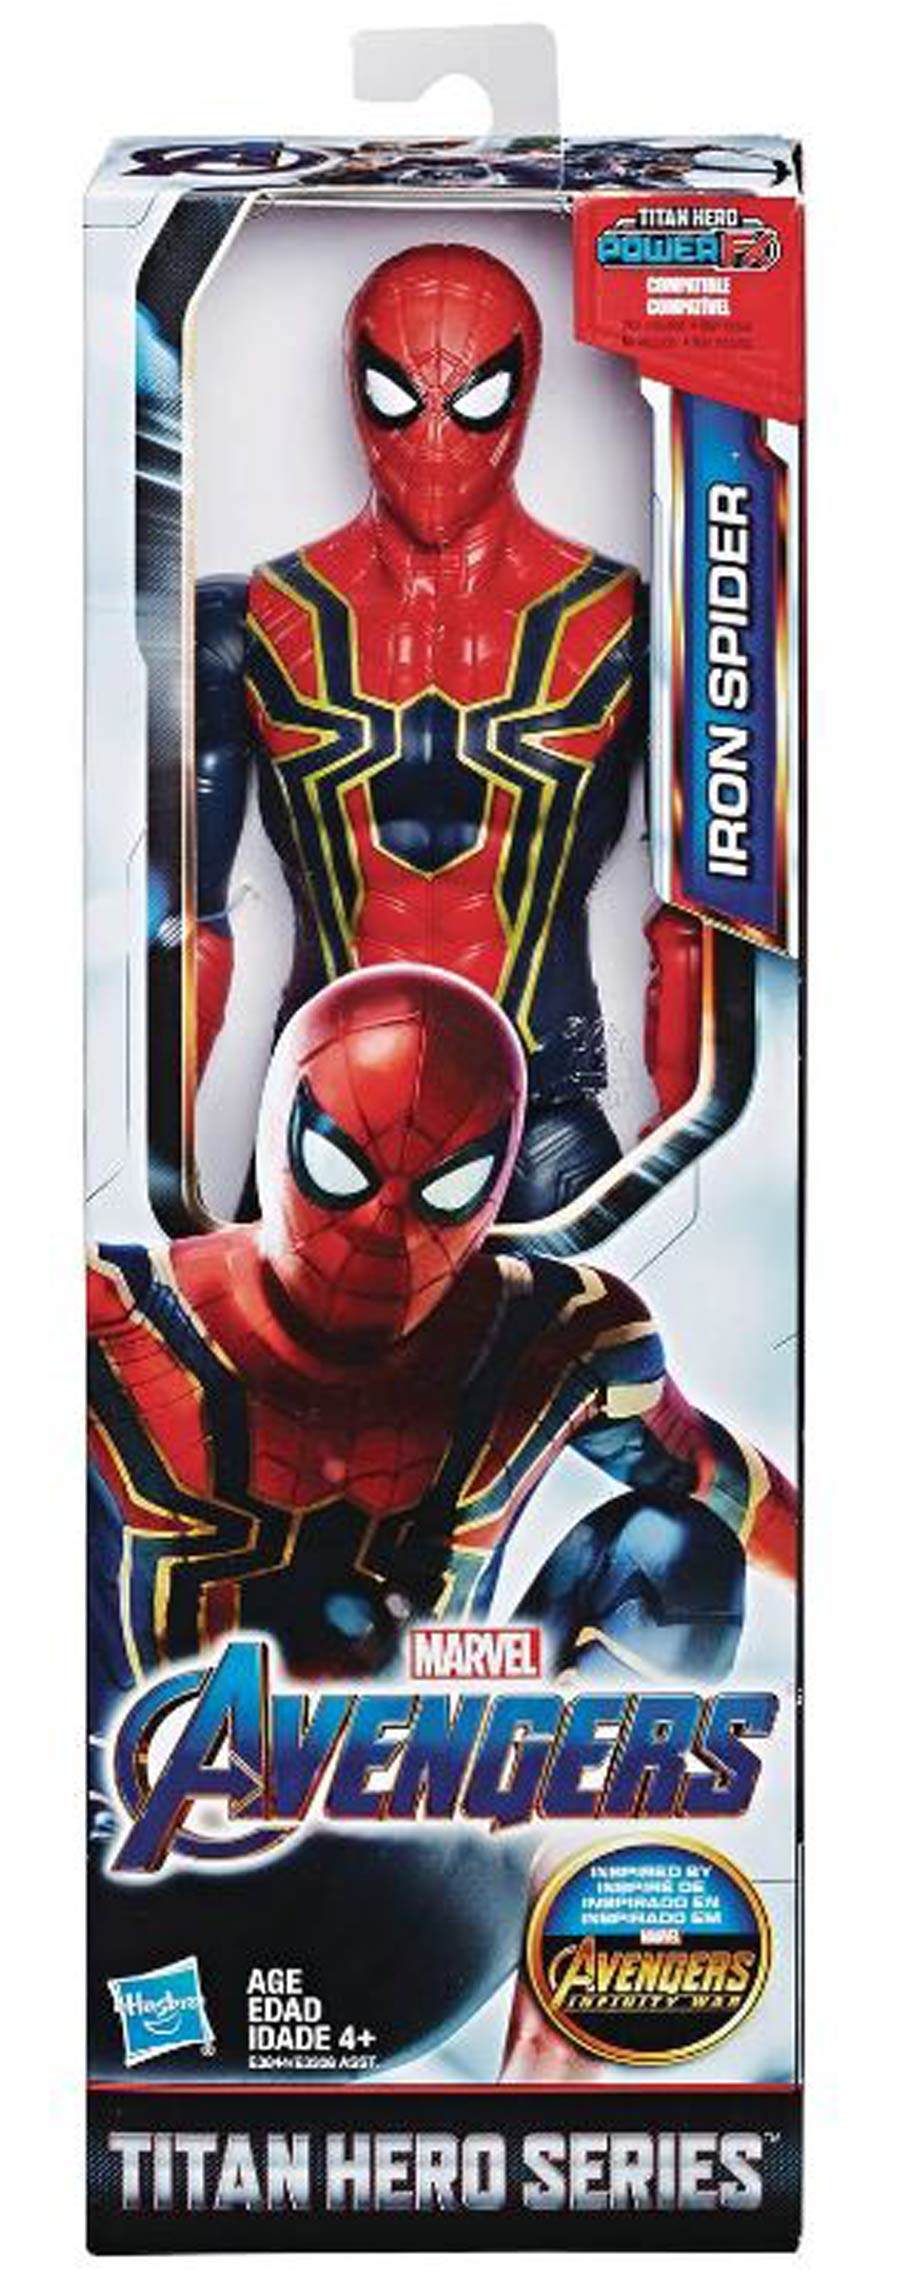 Avengers Endgame Titan Heroes 12-Inch Action Figure Assortment 201901-B - Iron Spider